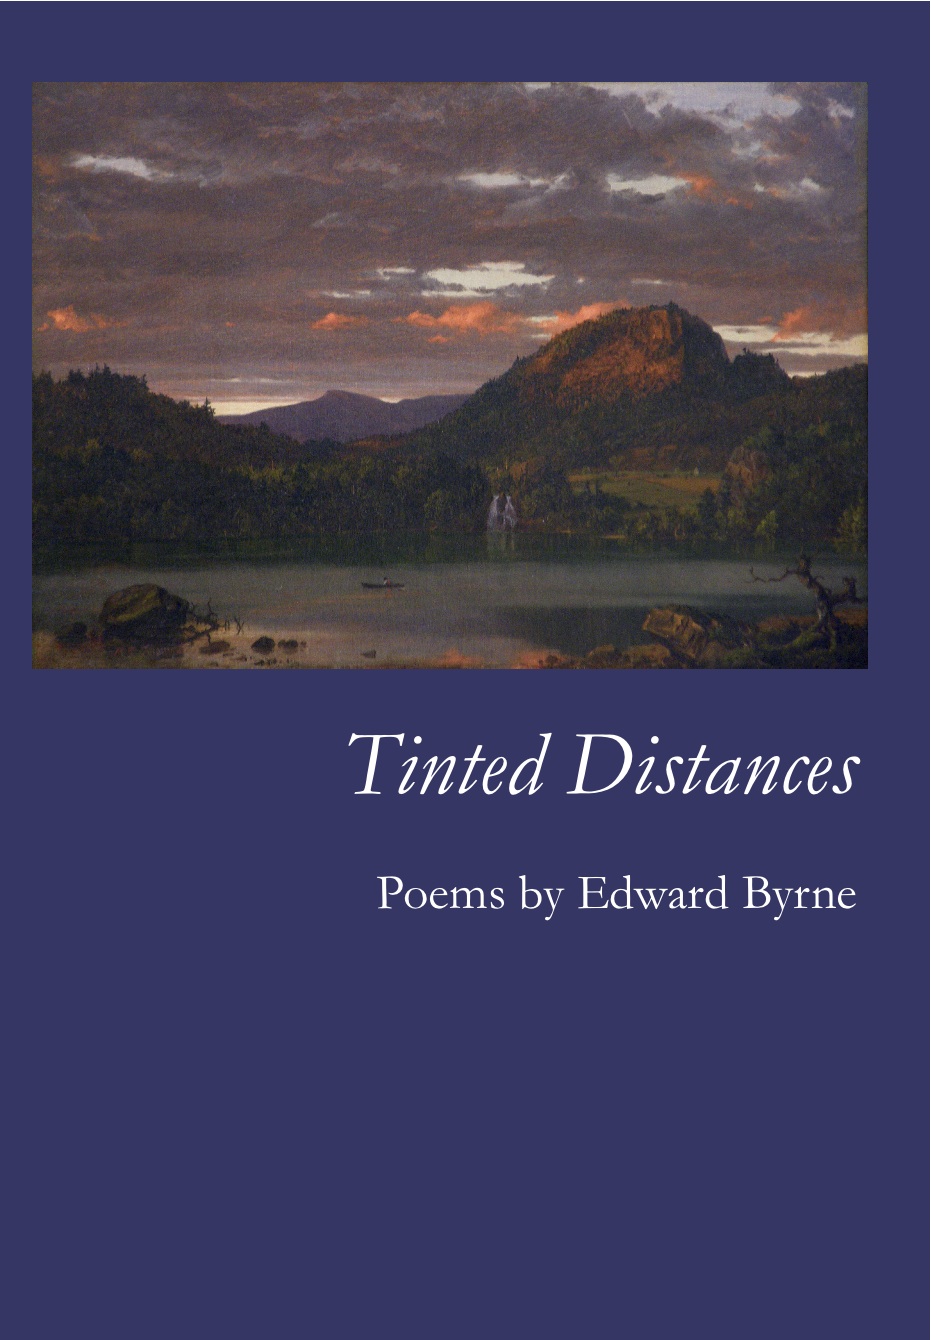 Edward Byrnes poems are